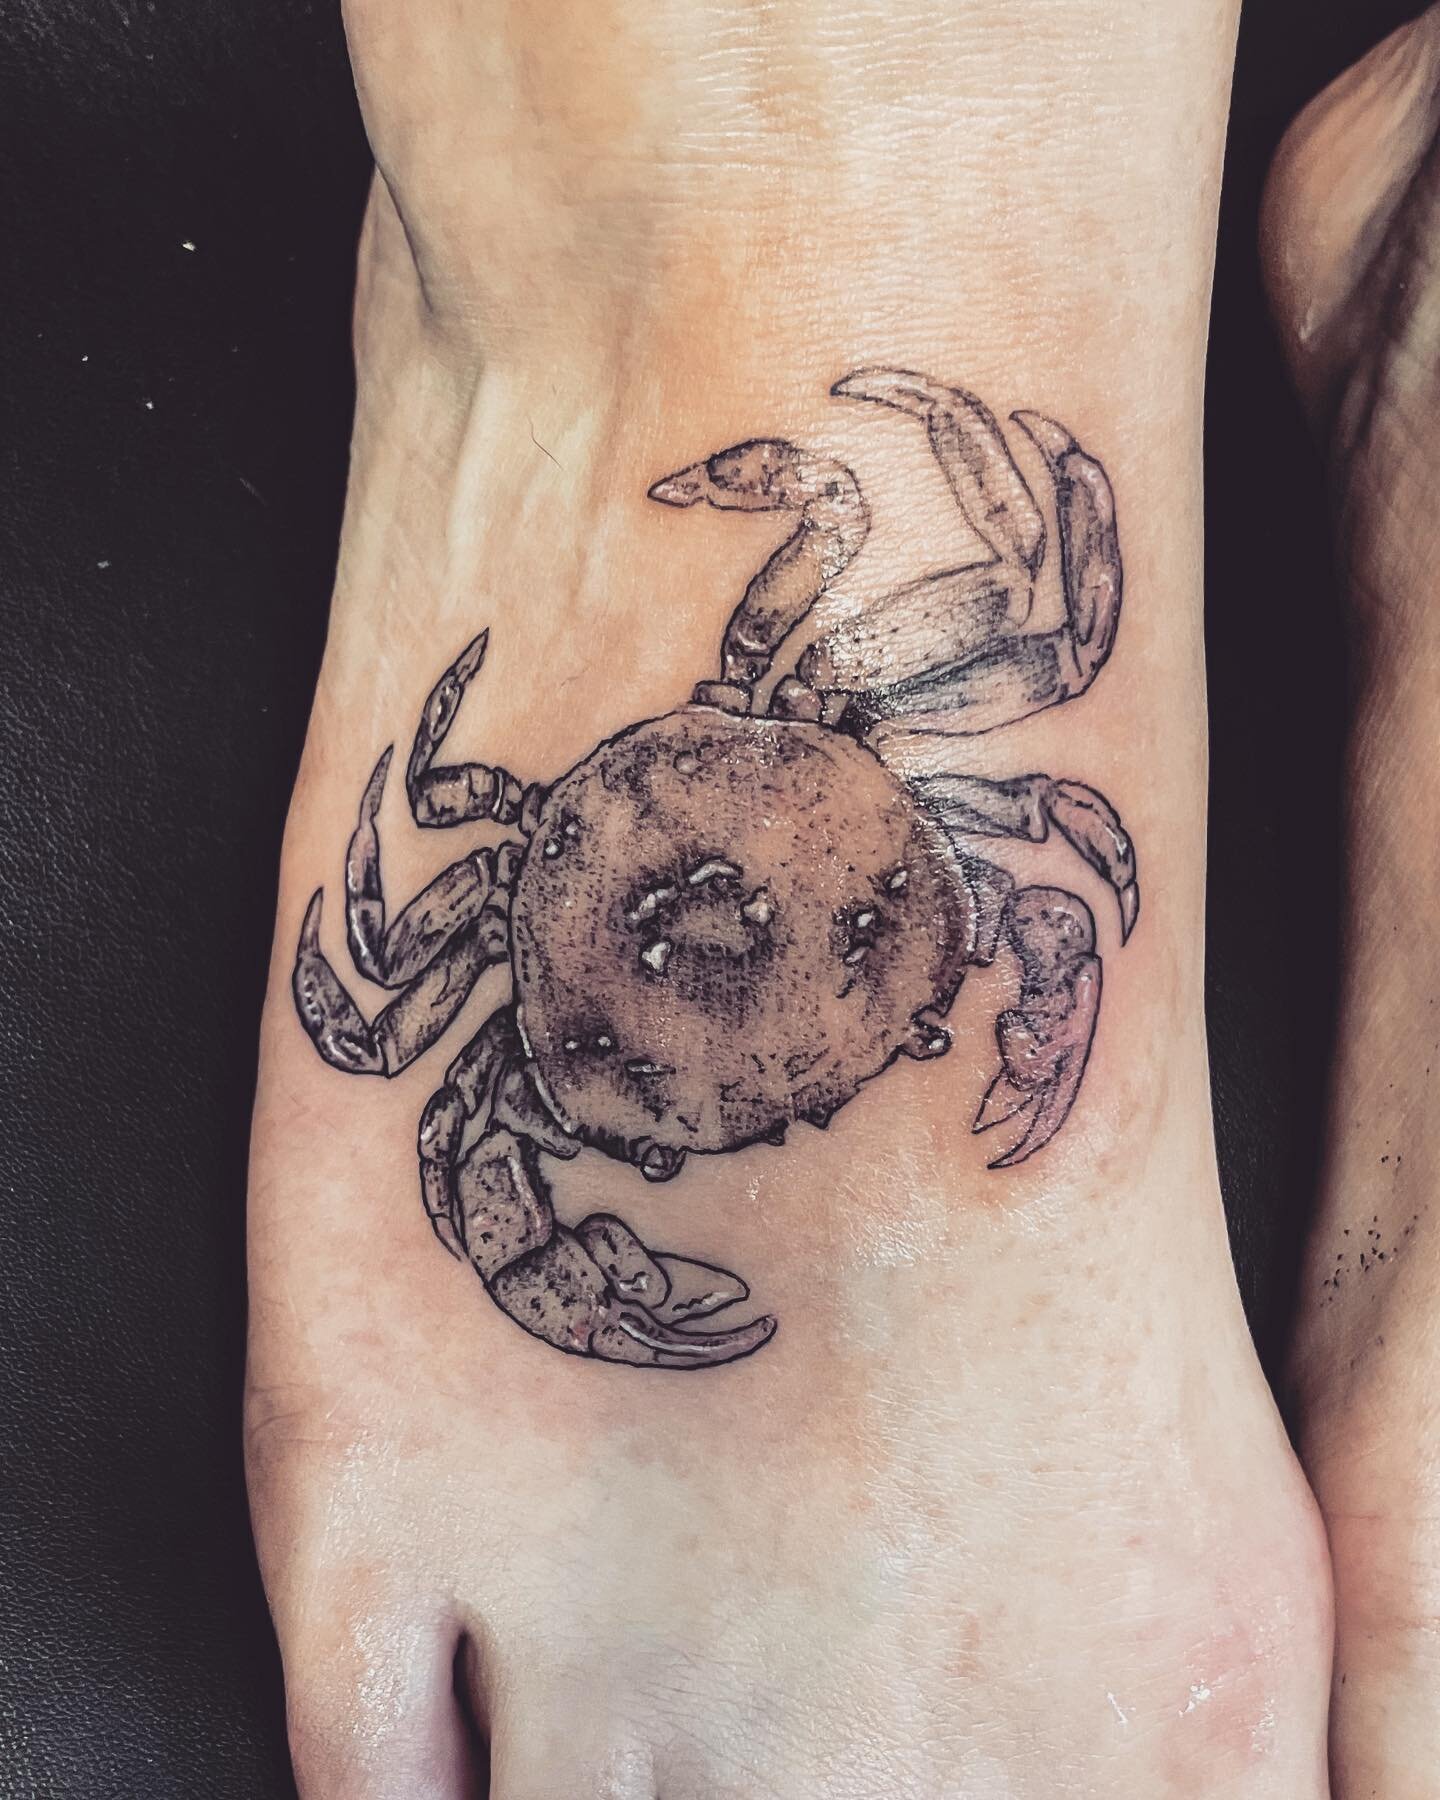 A pair of crab friends for Stephanie 🦀 
&bull;
&bull;
&bull;
#purpleshorecrab #dungeonesscrab #crabtattoo #marinelifetattoo #foottattoo